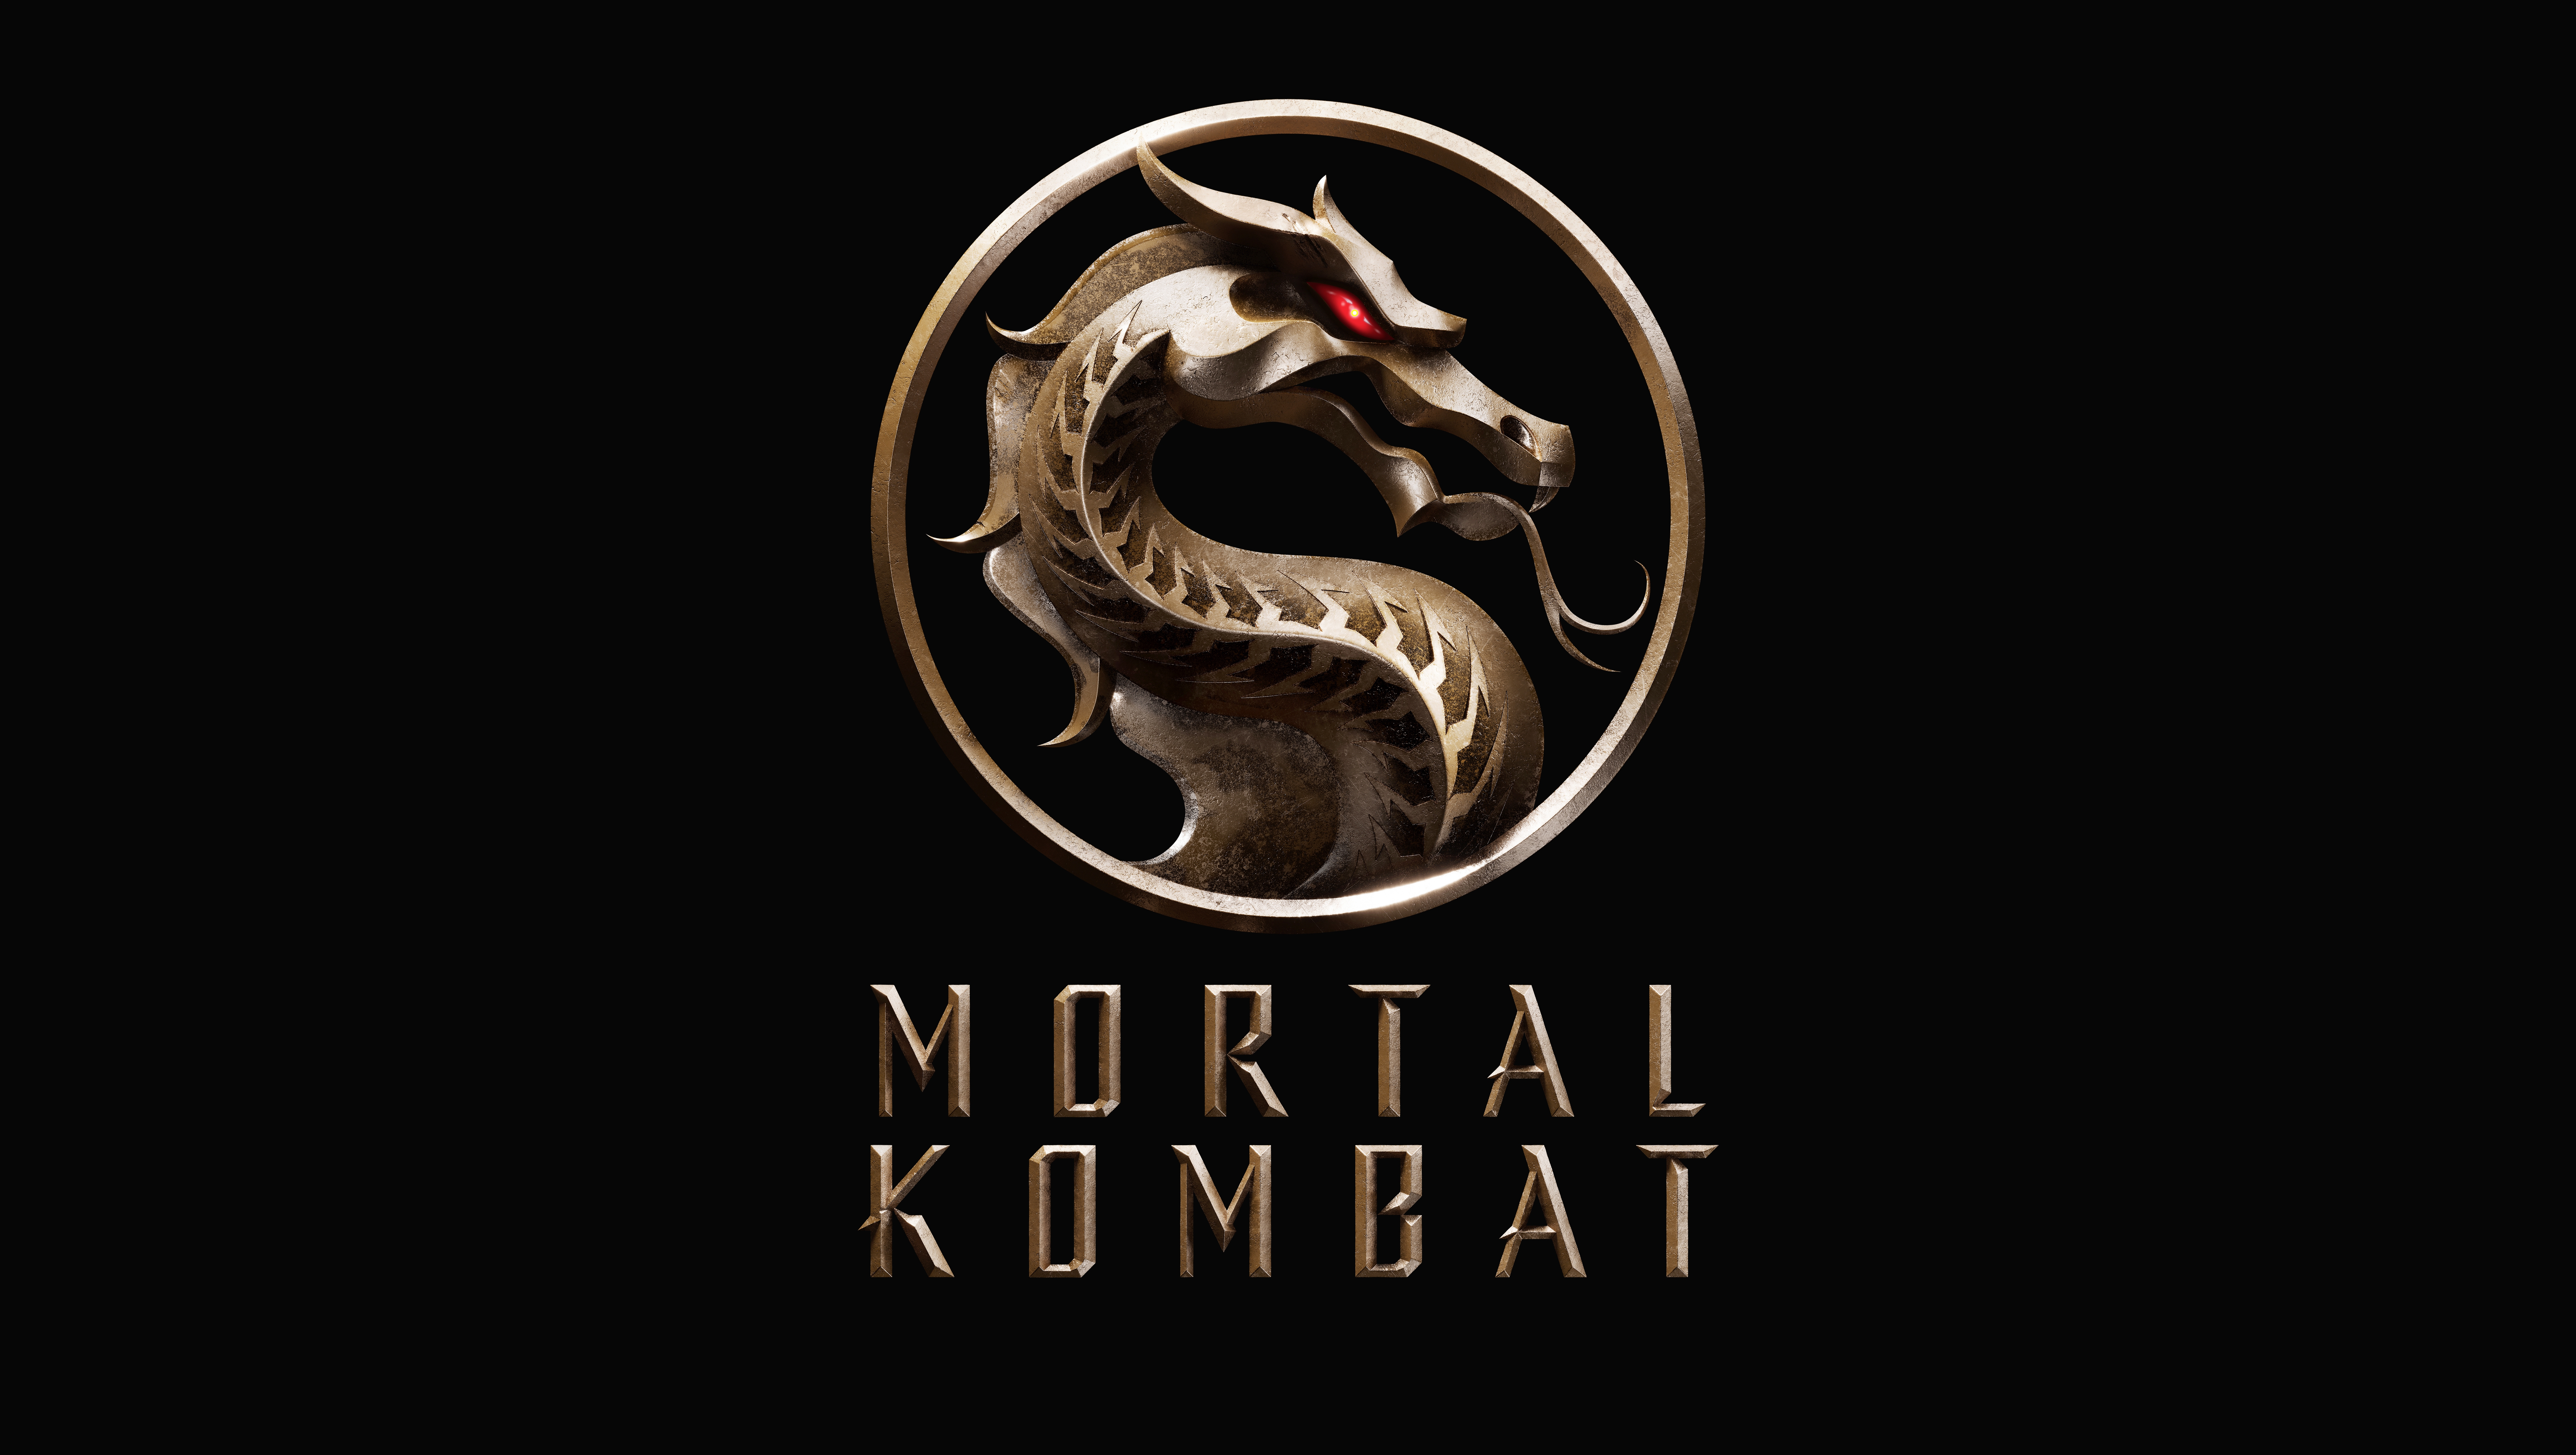 HD wallpaper, 2021 Movies, Mortal Kombat, 8K, Black Background, 5K, Amoled